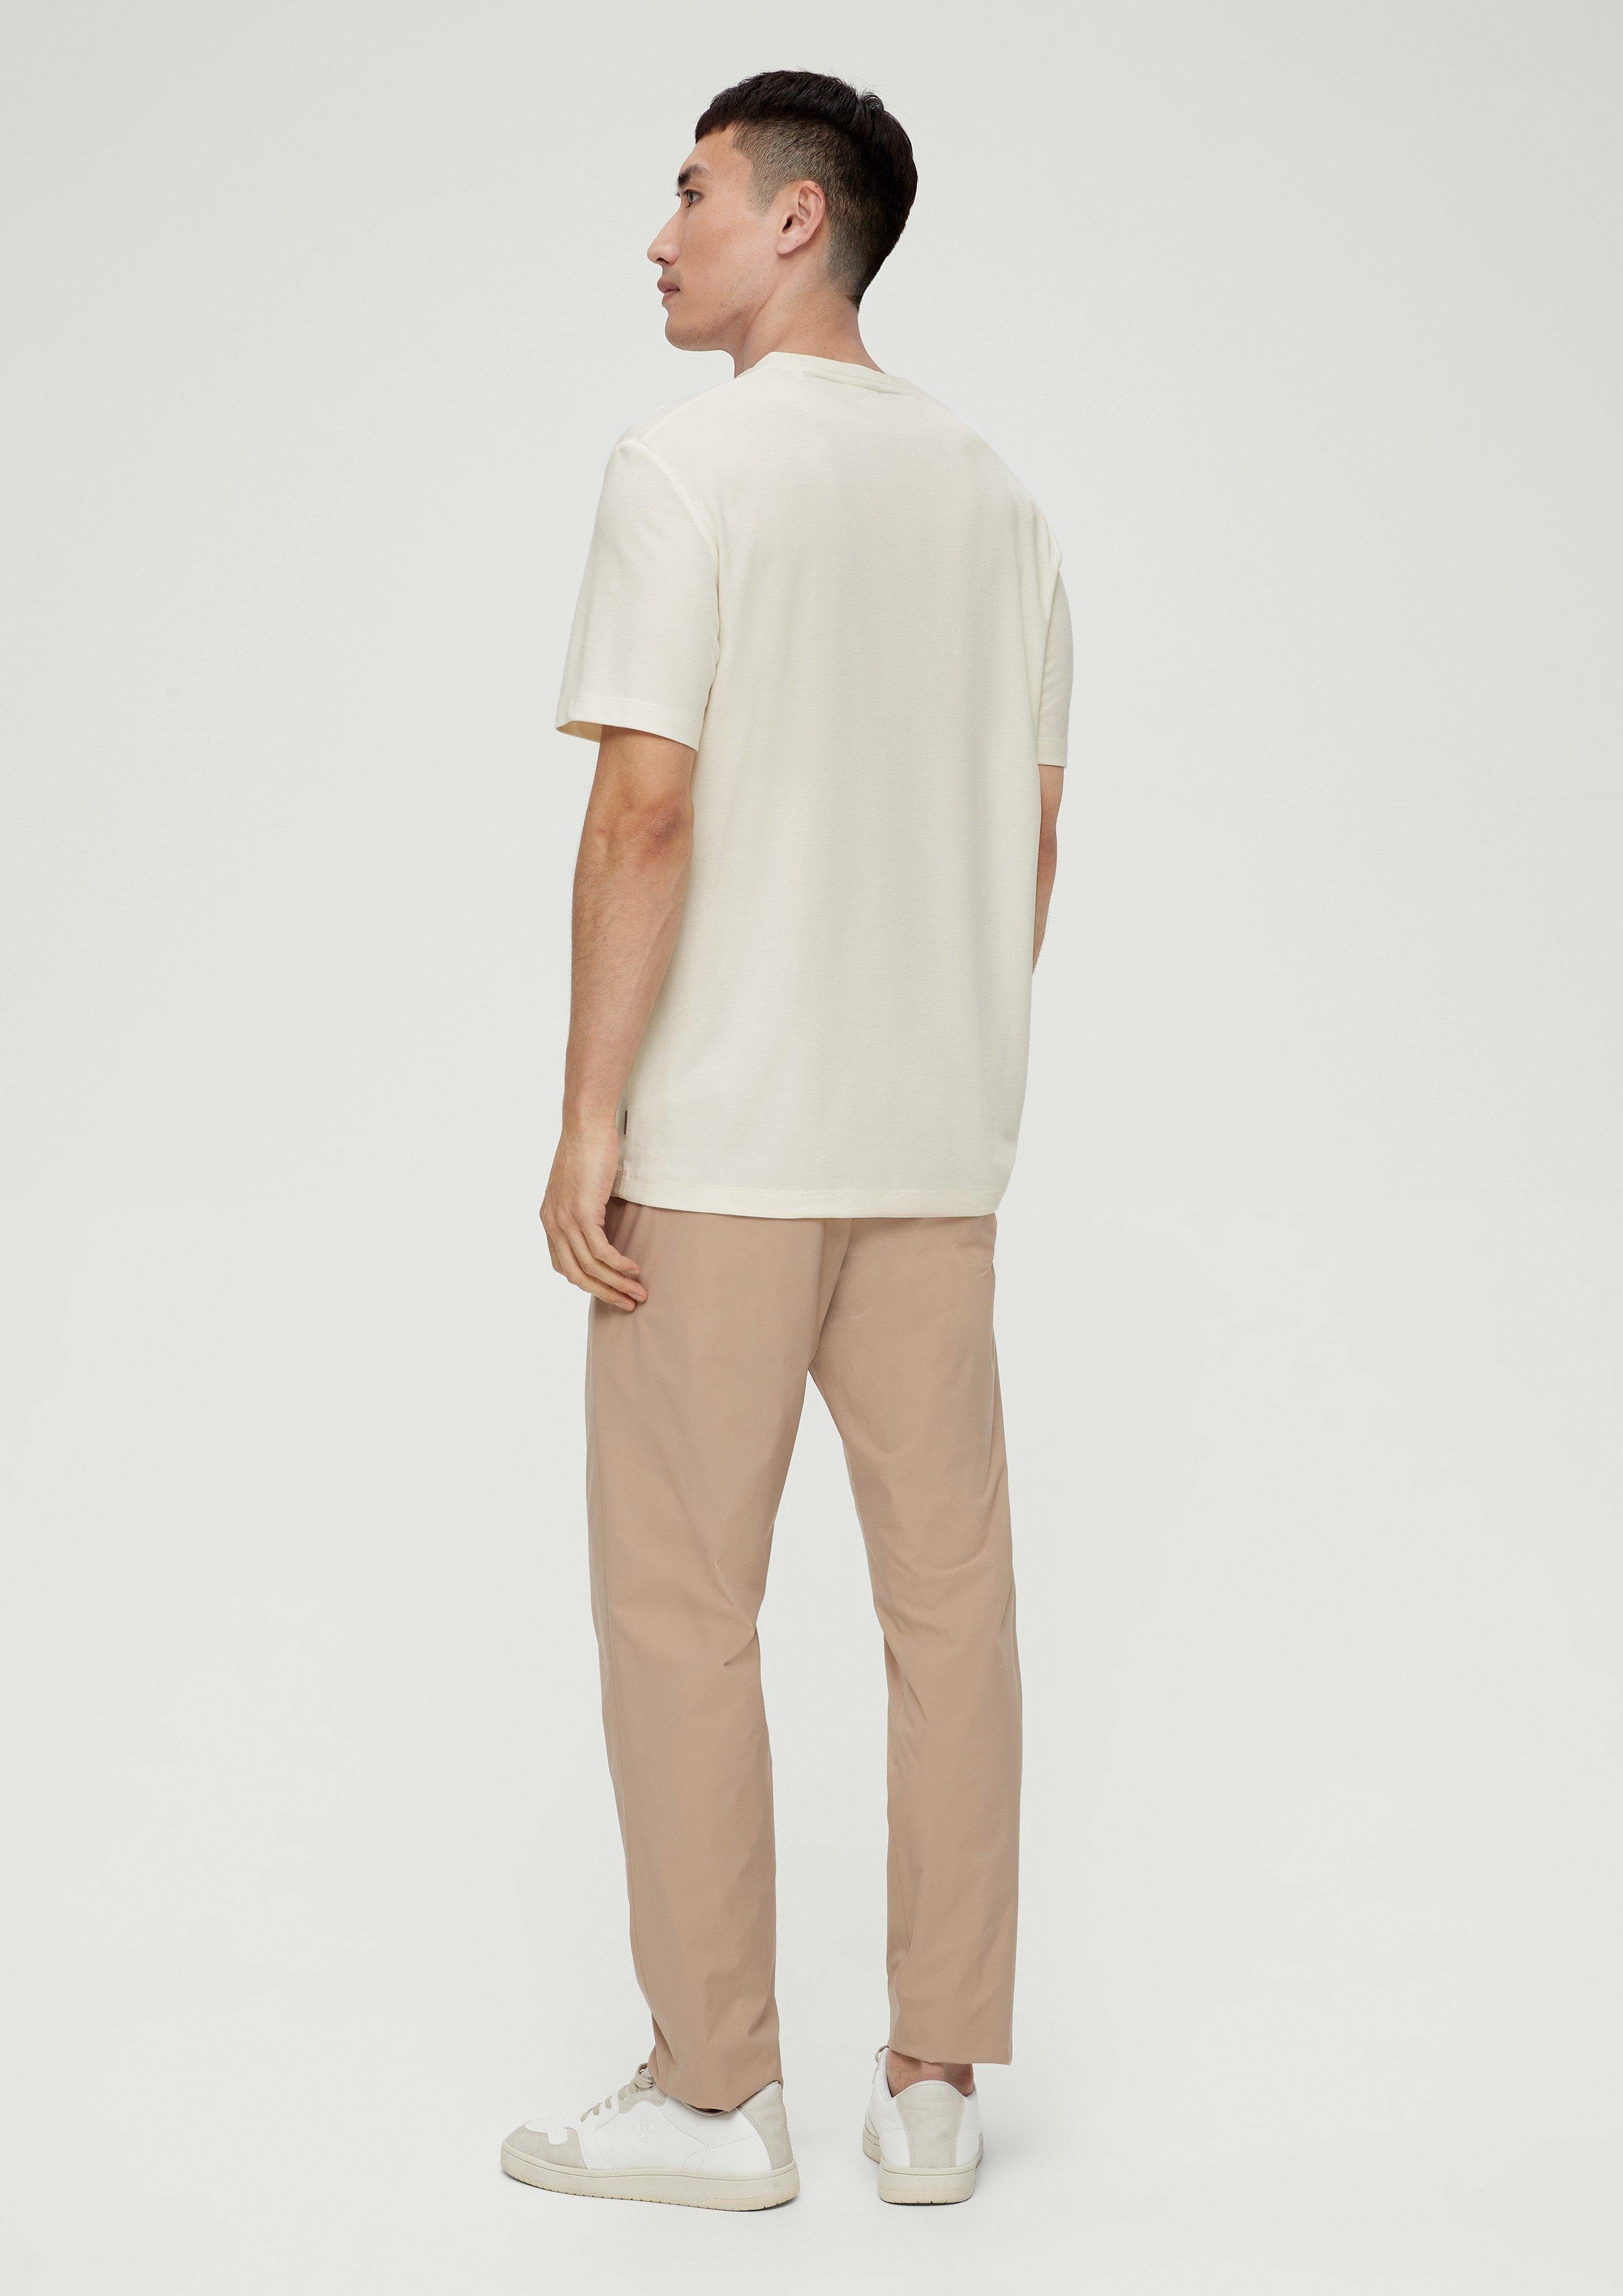 s.Oliver Kurzarmshirt Hochwertiges Modal T-Shirt wollweiß Piquéstruktur mit